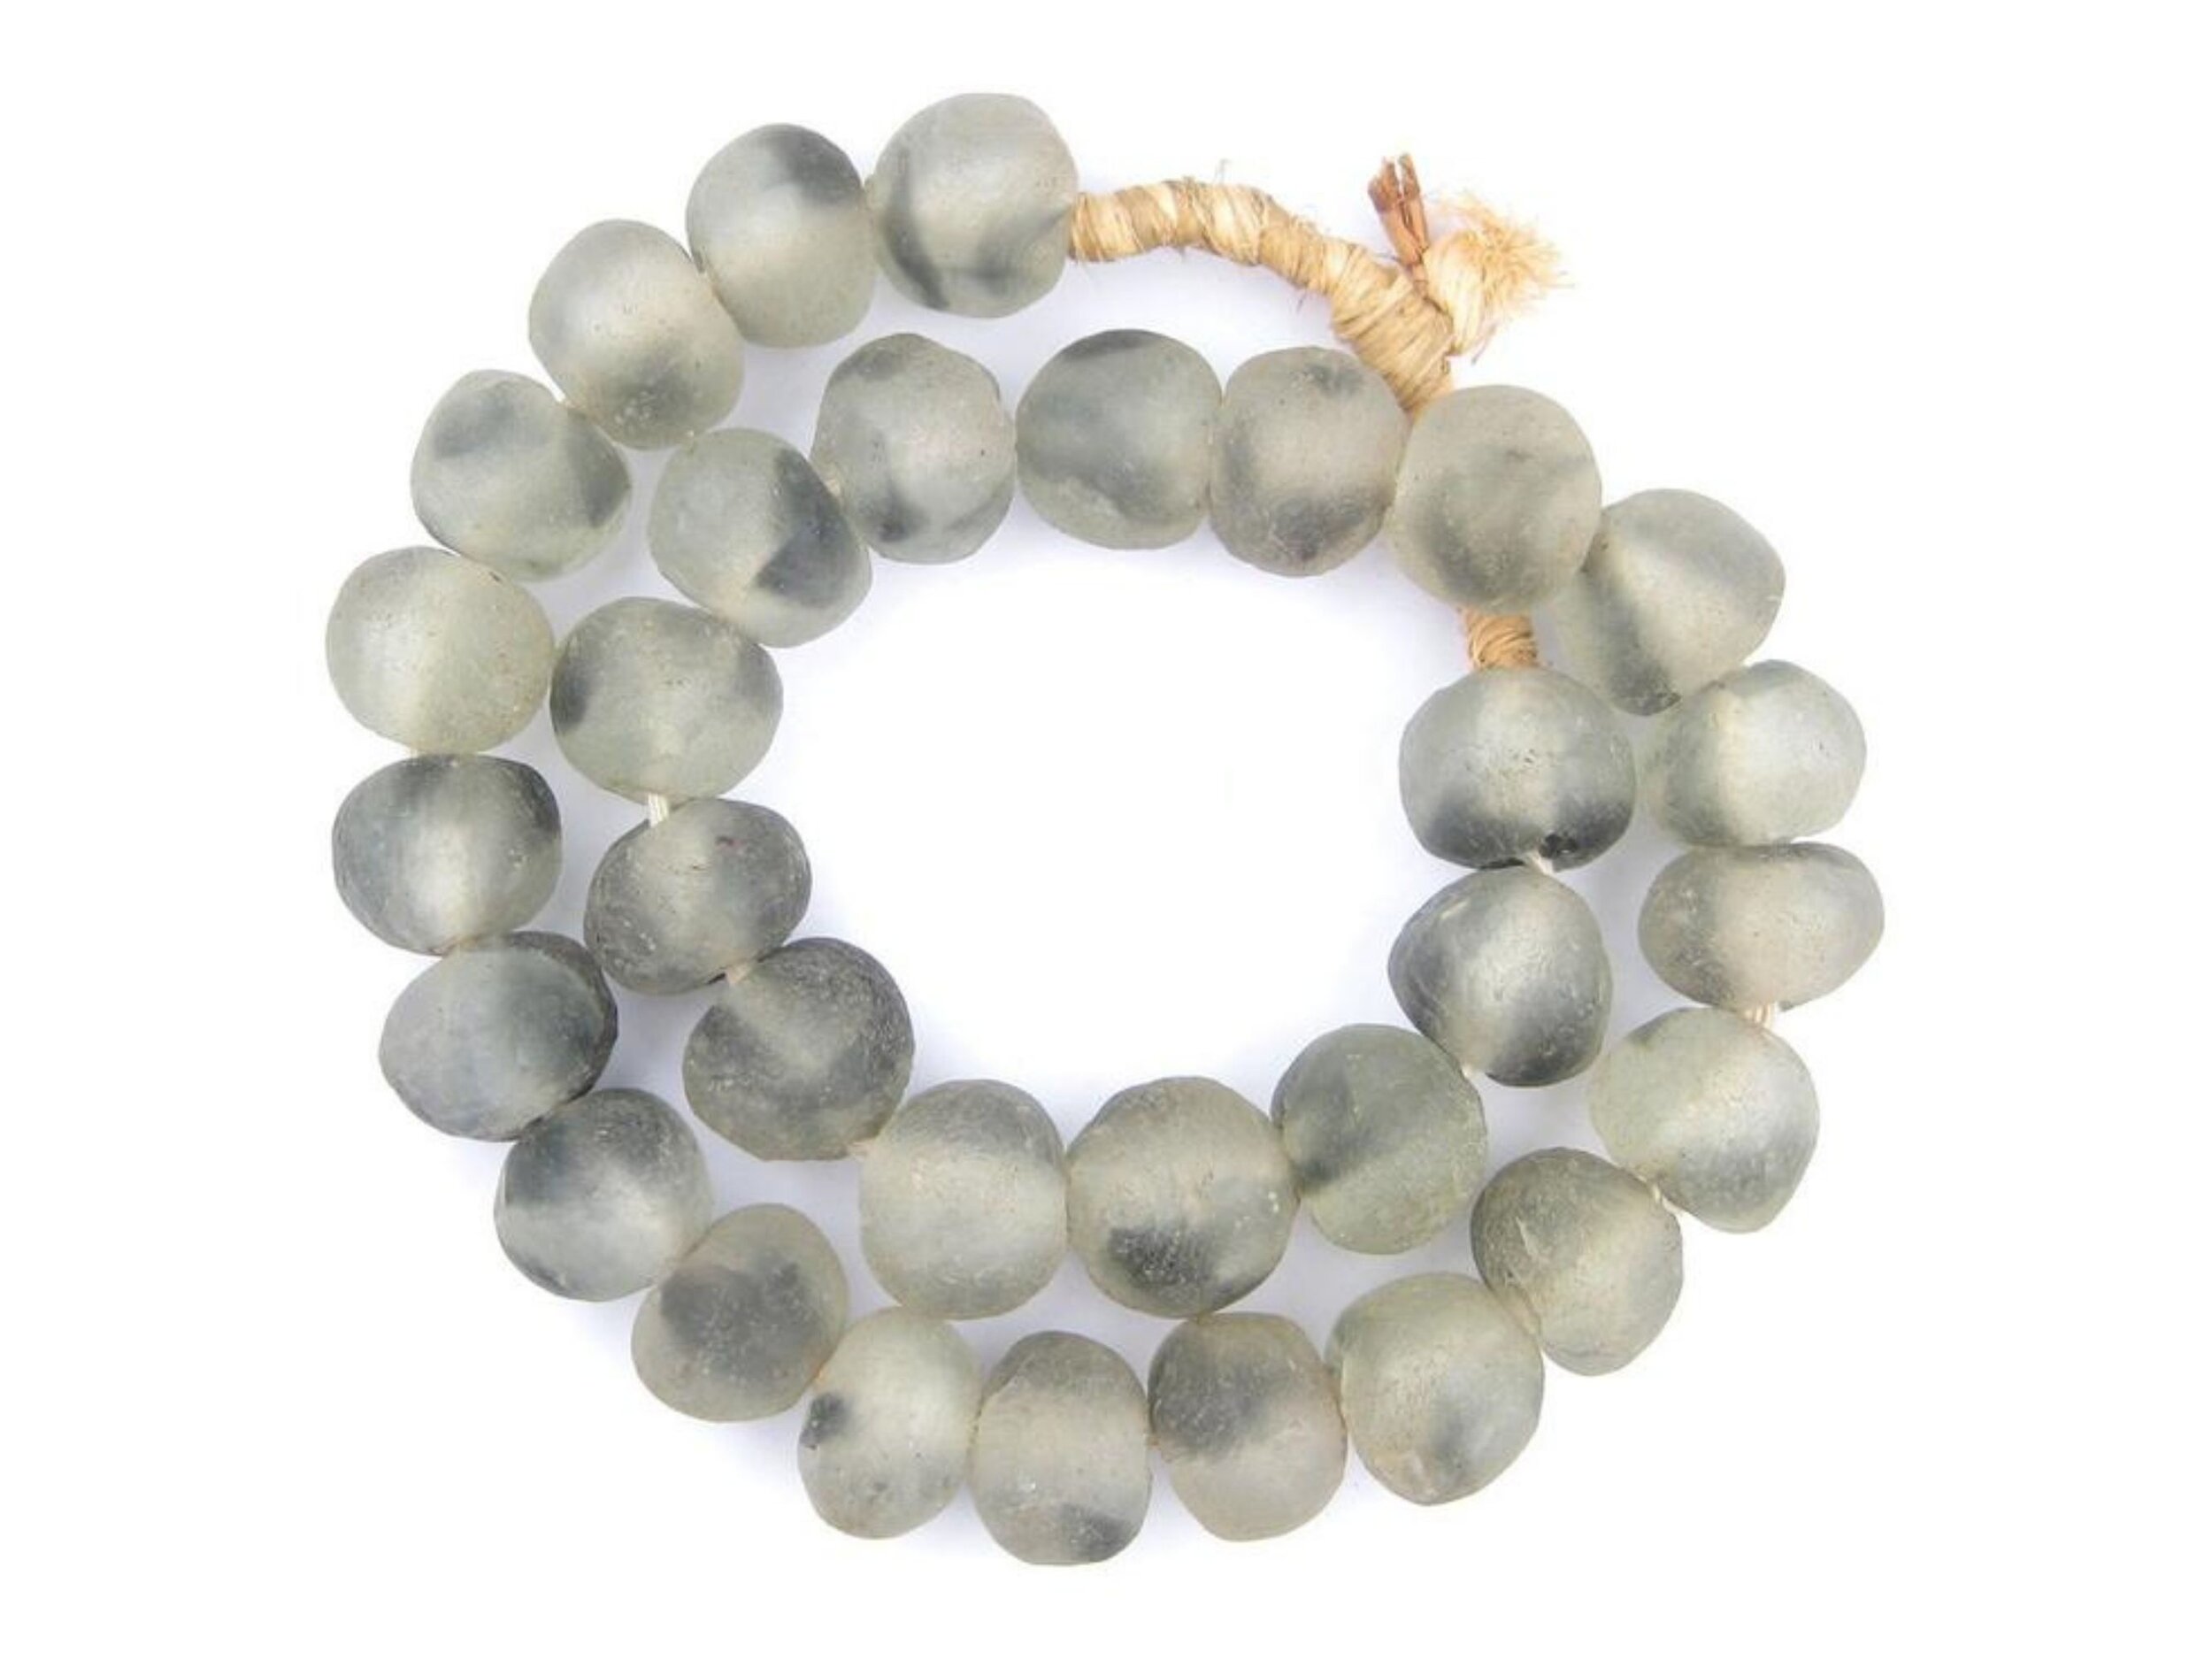 Jumbo Grey Mist Recycled Glass Beads